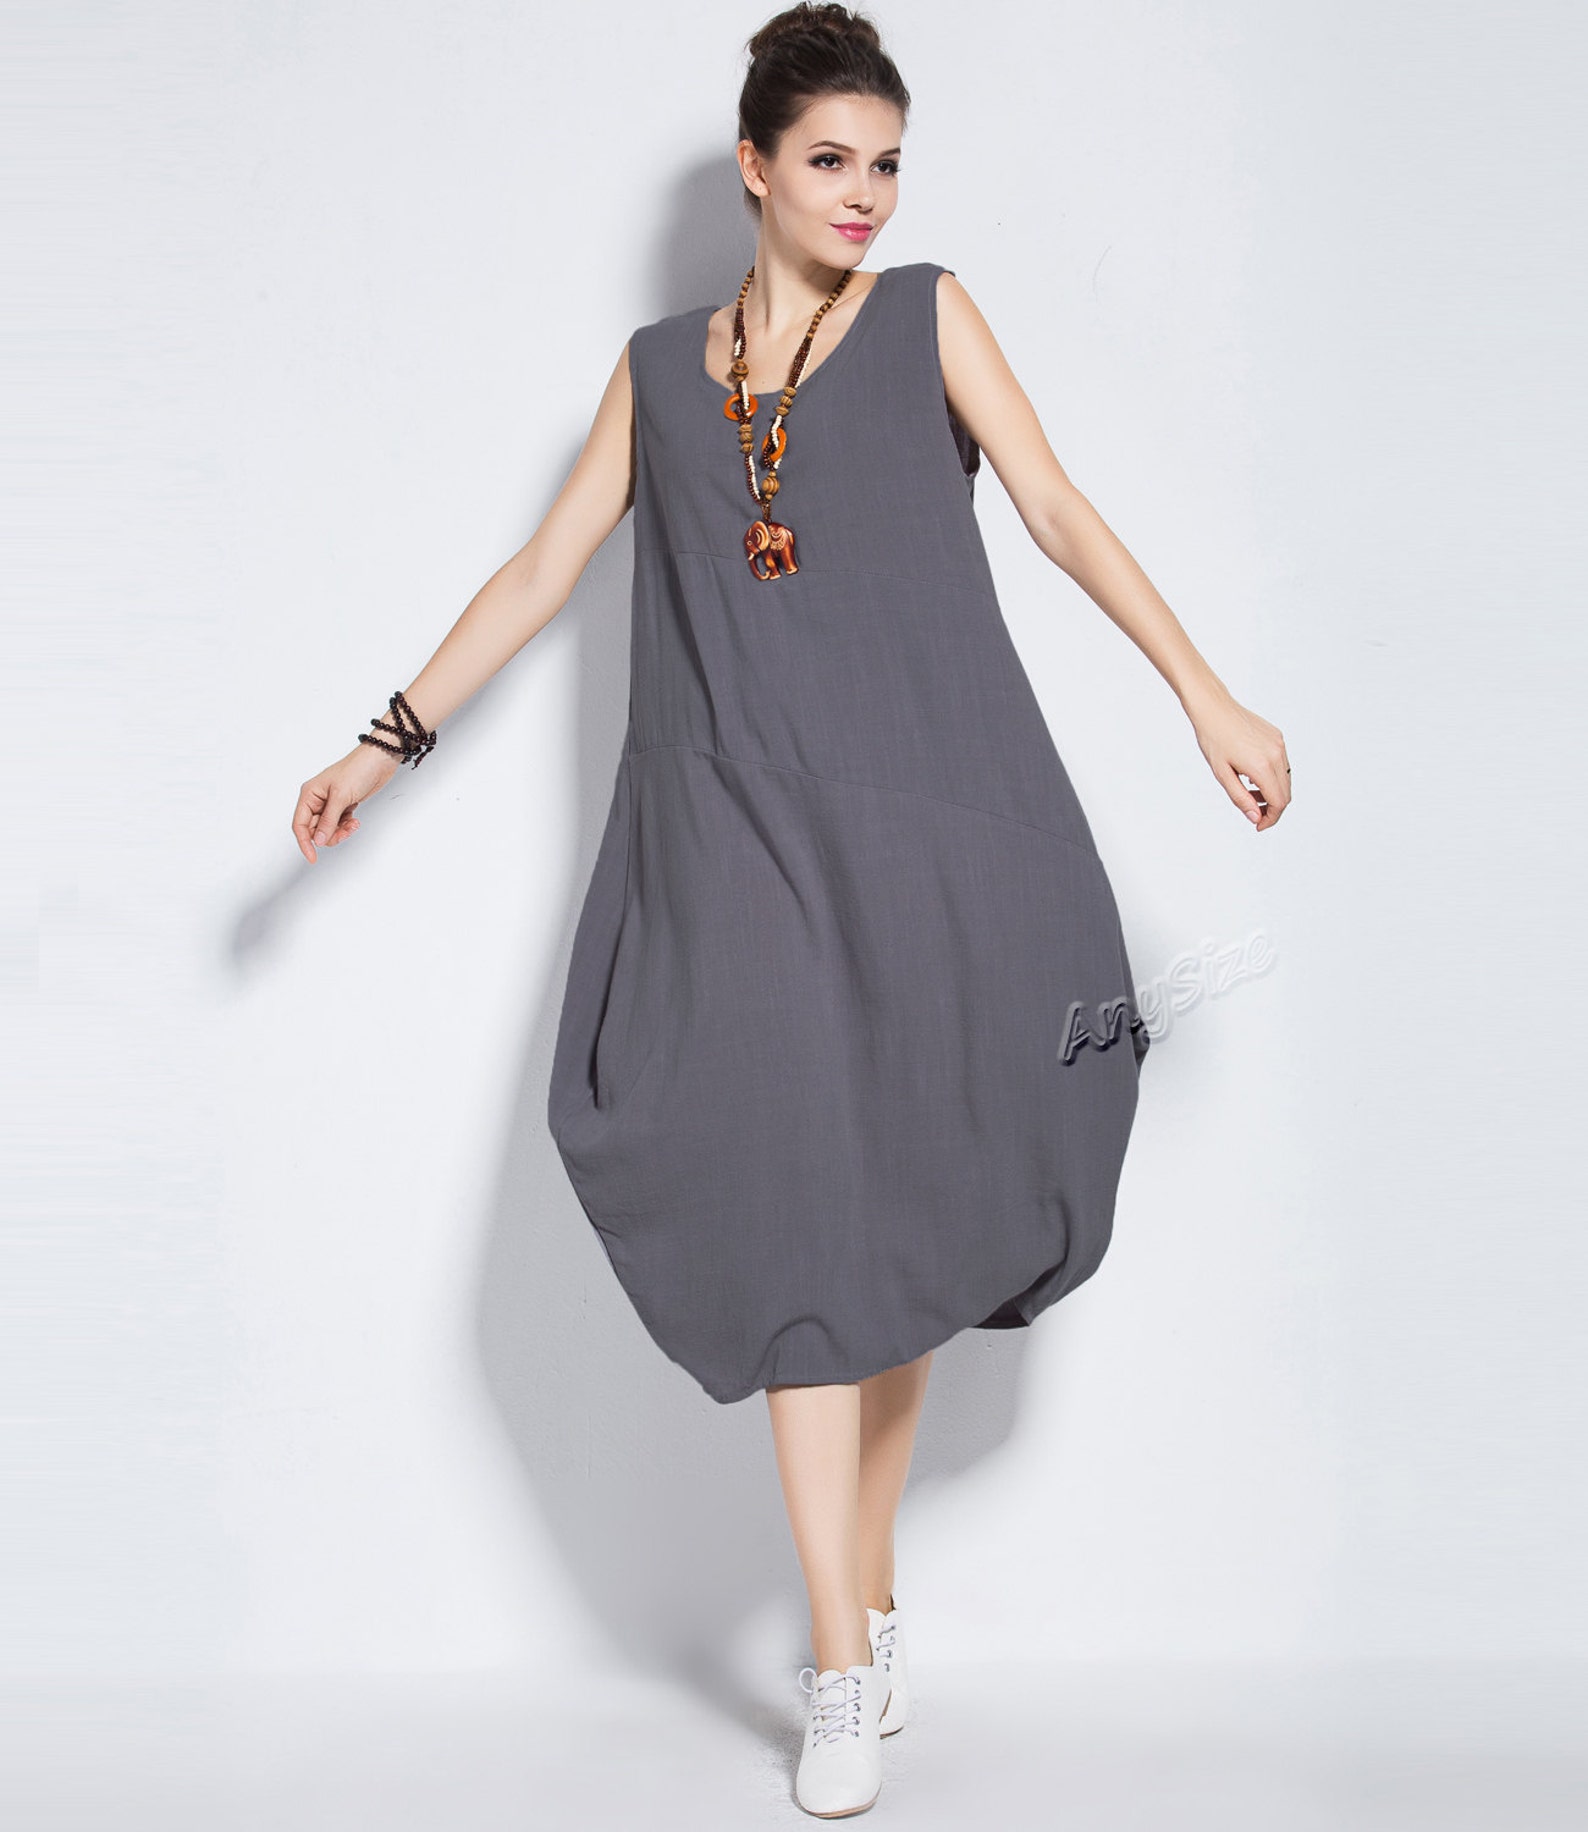 Anysize sleeveless soft linen lantern dress plus size dress | Etsy